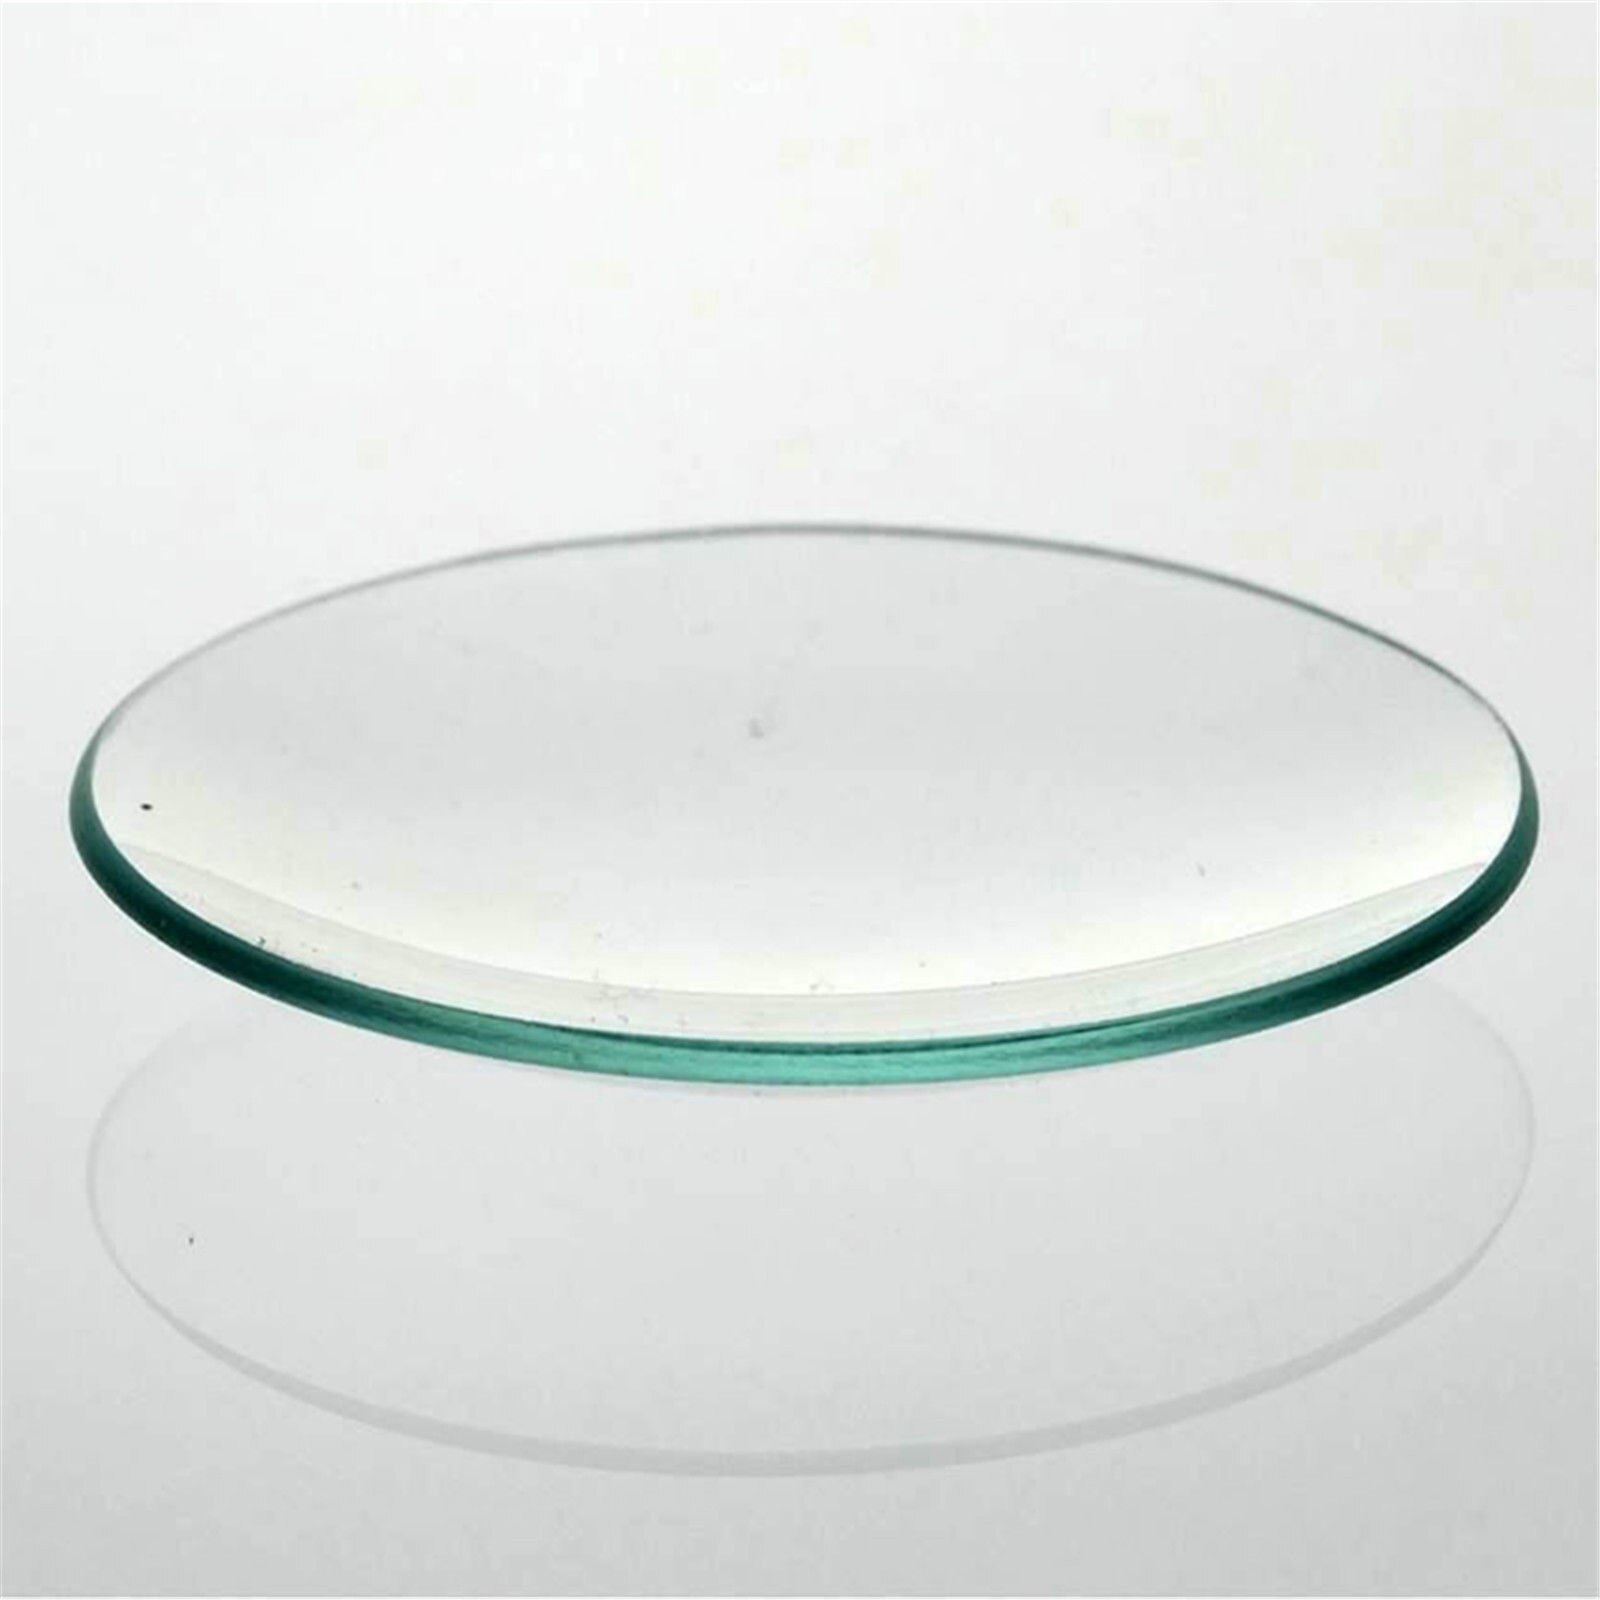 90mm, laboratorie ur glas skål, overflade disk, ydre diameter 9cm,10 stk / parti